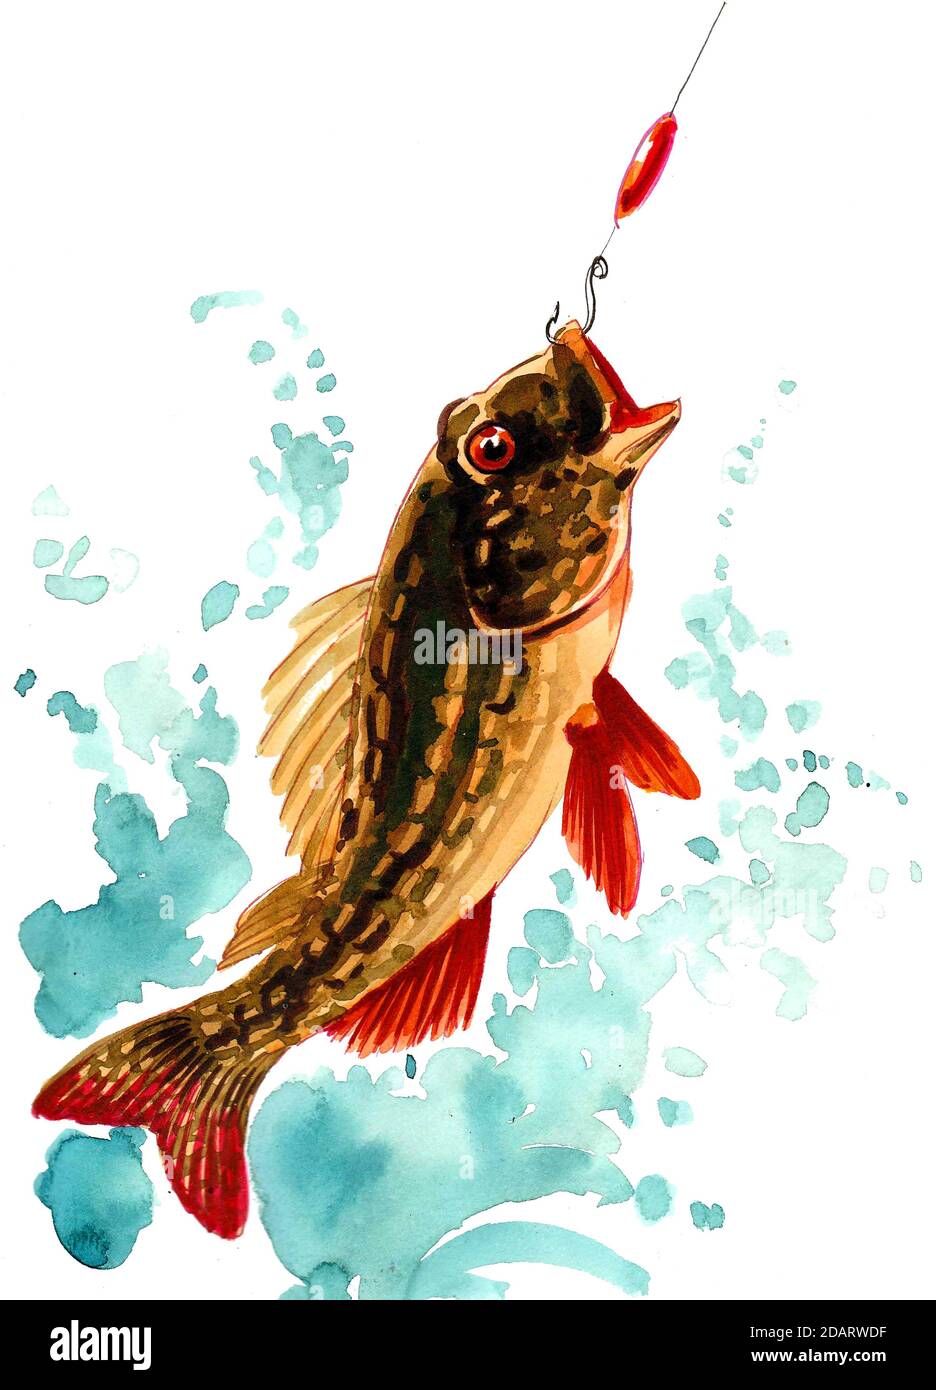 Fish biting fishing hook. Ink and watercolor drawing Stock Photo - Alamy